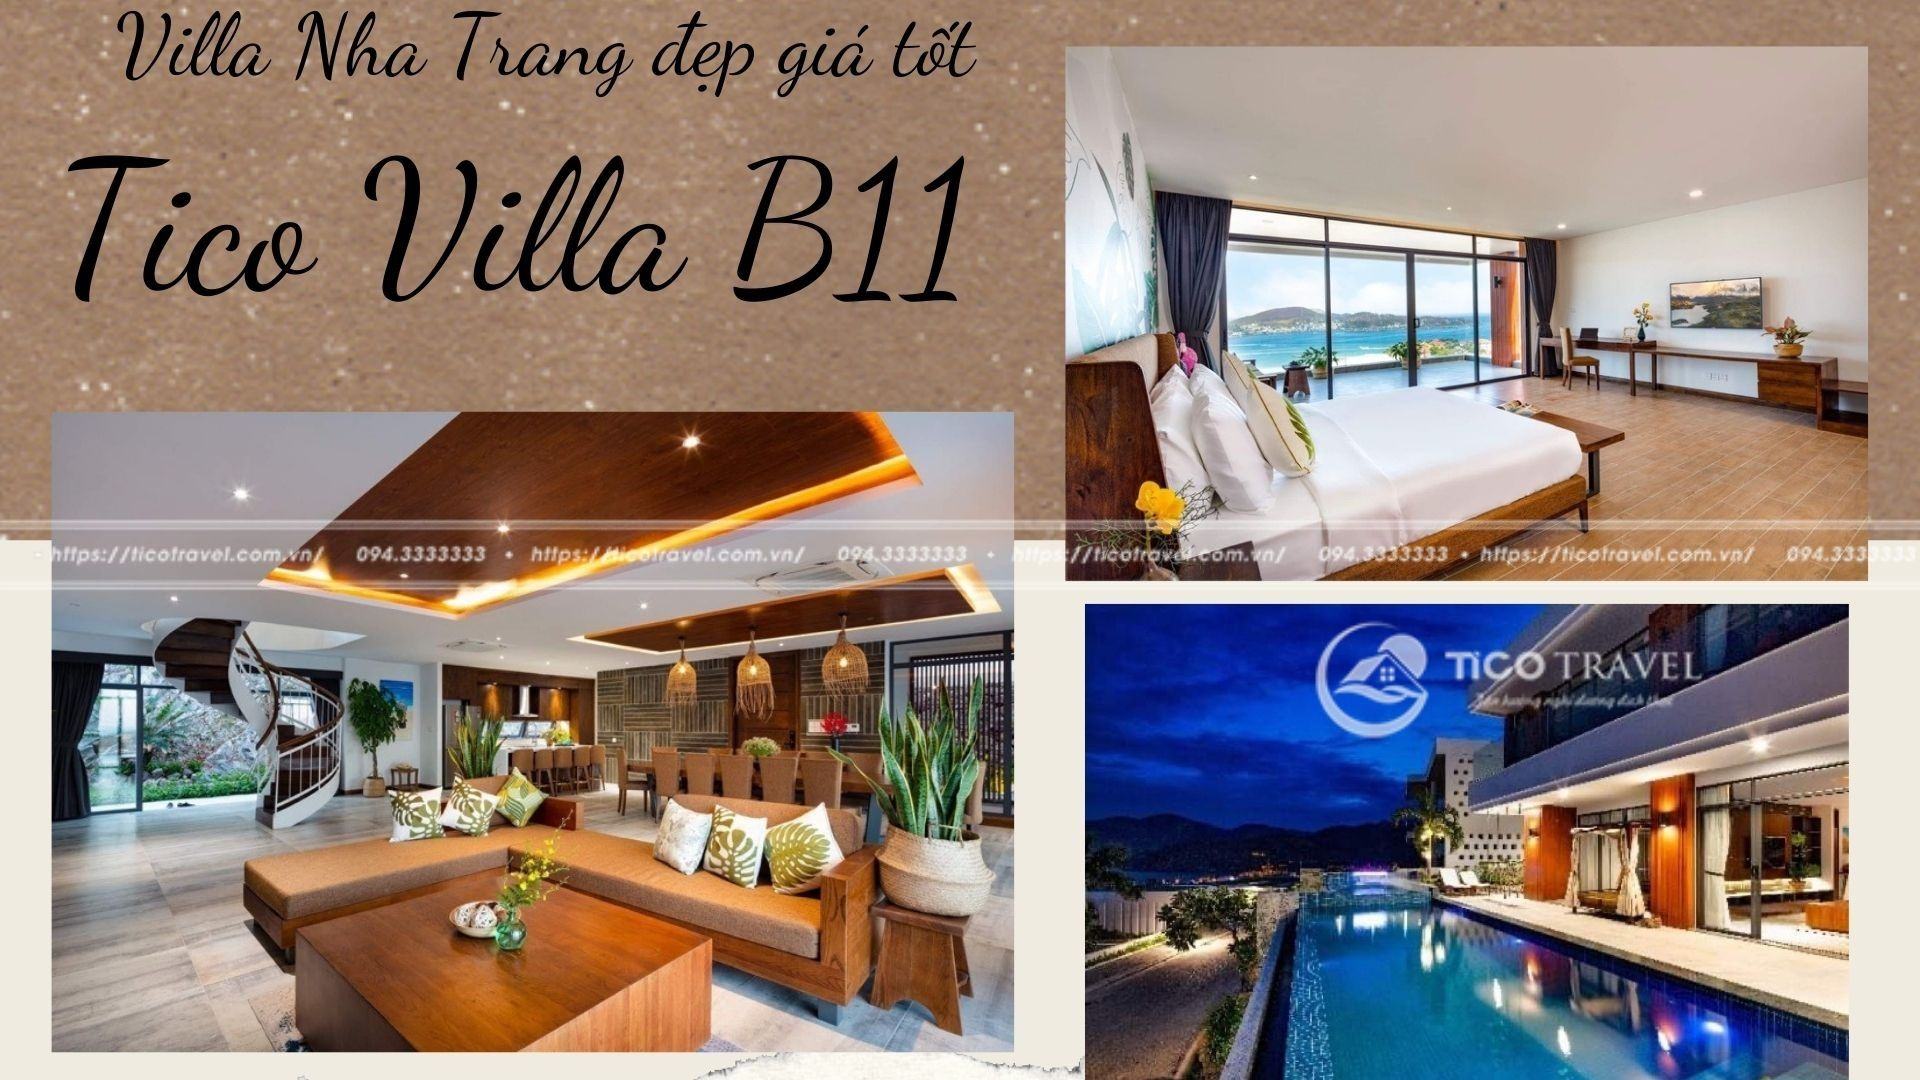 Tico Villa B11 Nha Trang